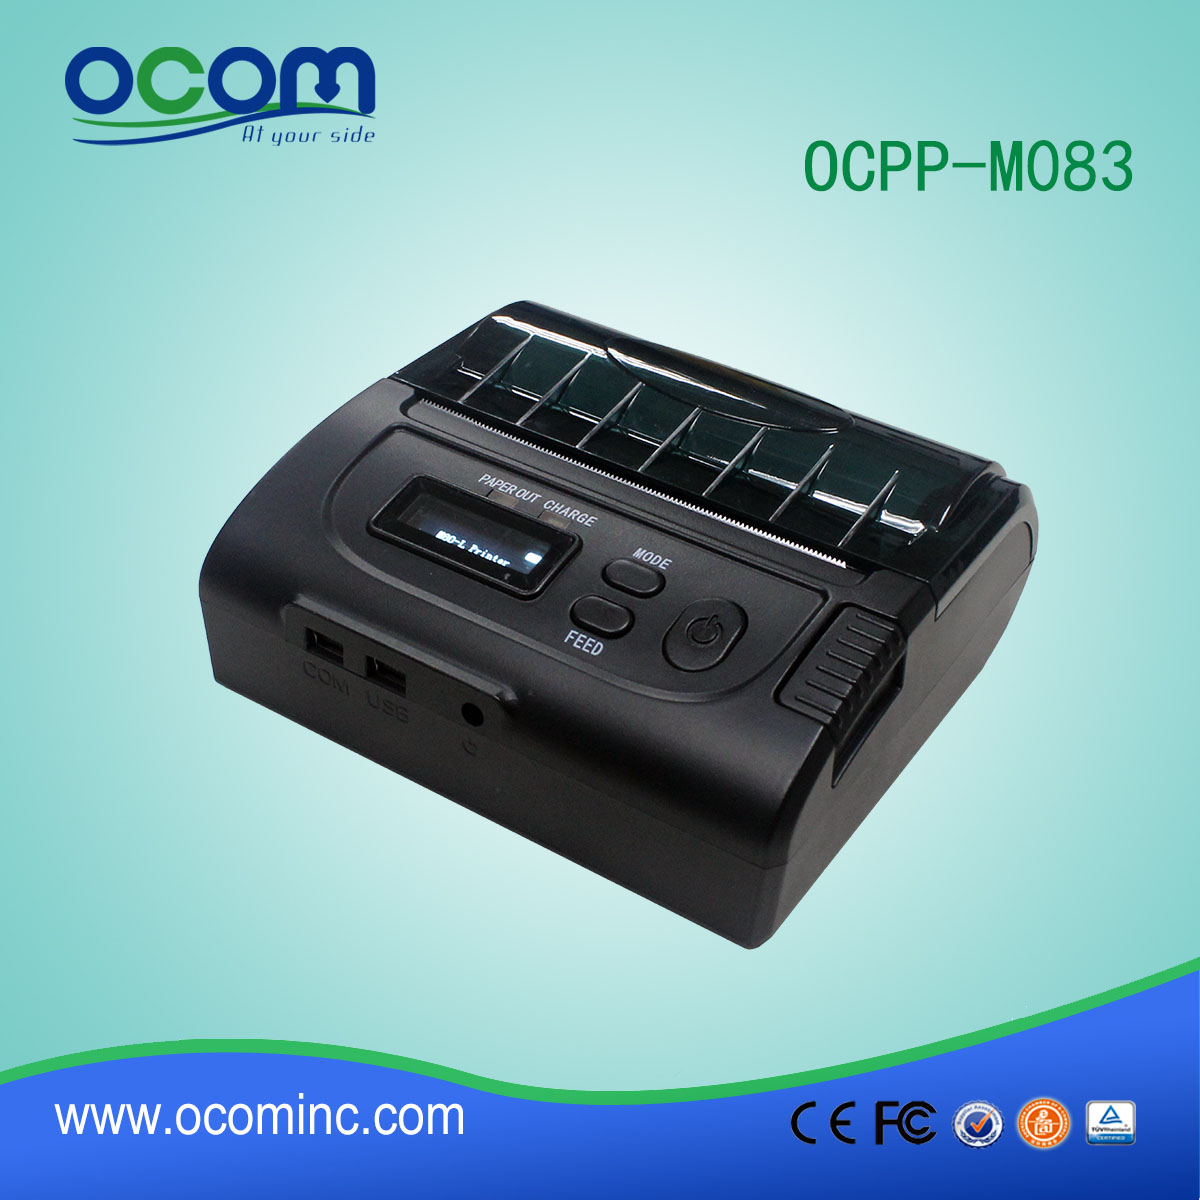 OCPP-M083 80мм бумажный смартфон bluetooth мини-принтер